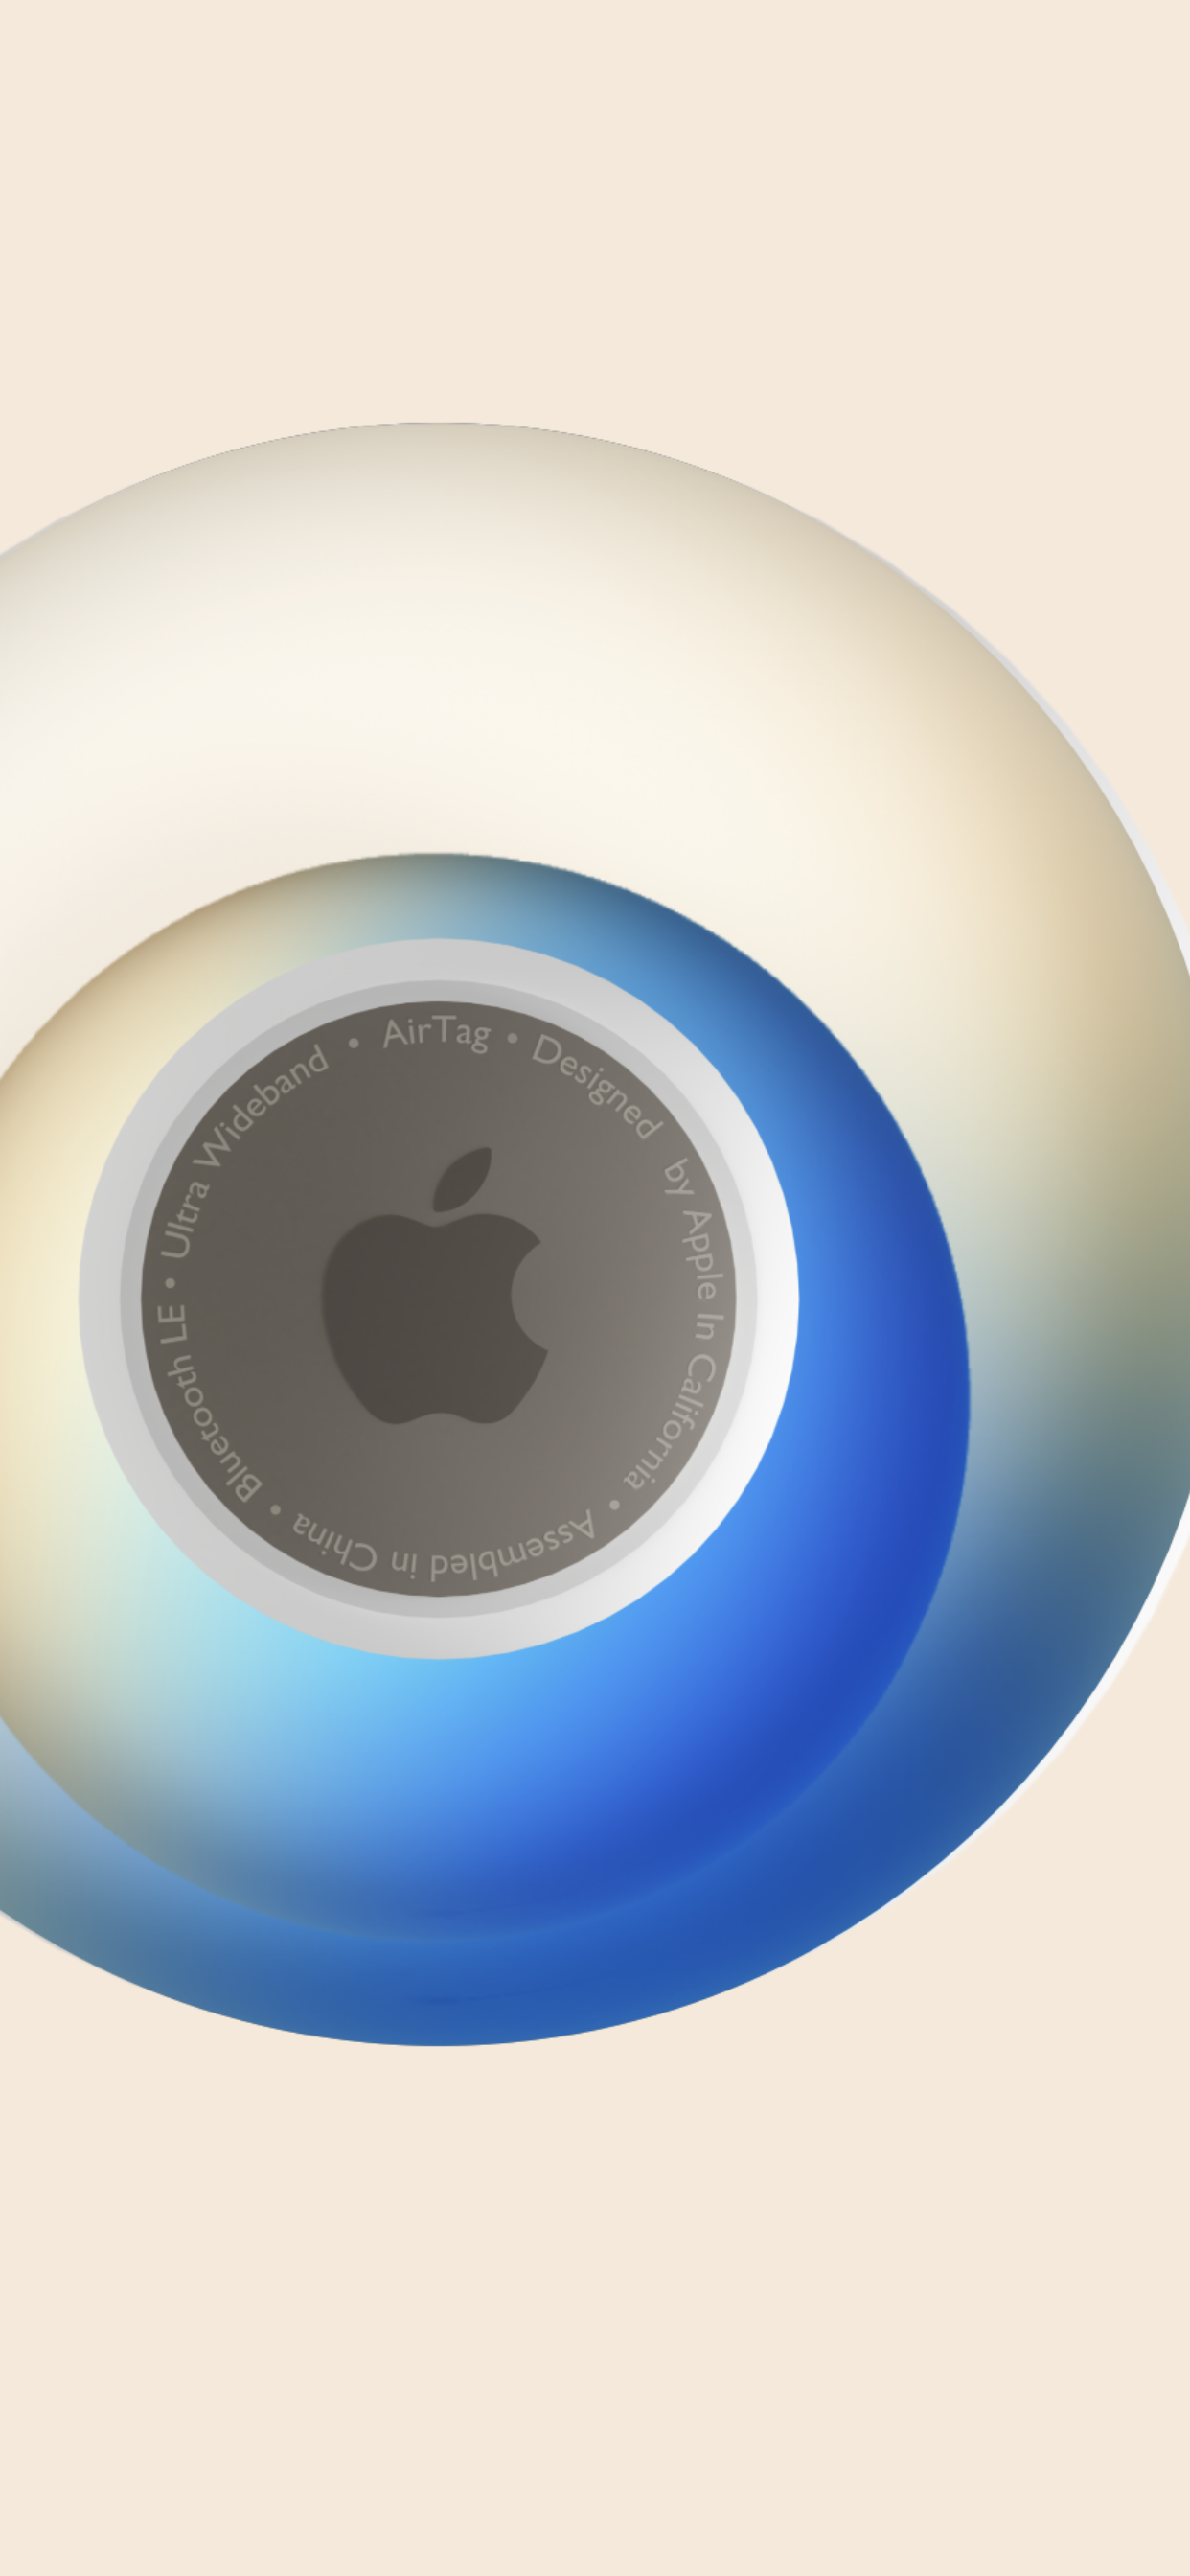  Apple IPhone Hintergrundbild 1242x2688. iPhone 12 Keynote: Wallpaper zum „Hi, Speed“-Event als Download › Macerkopf